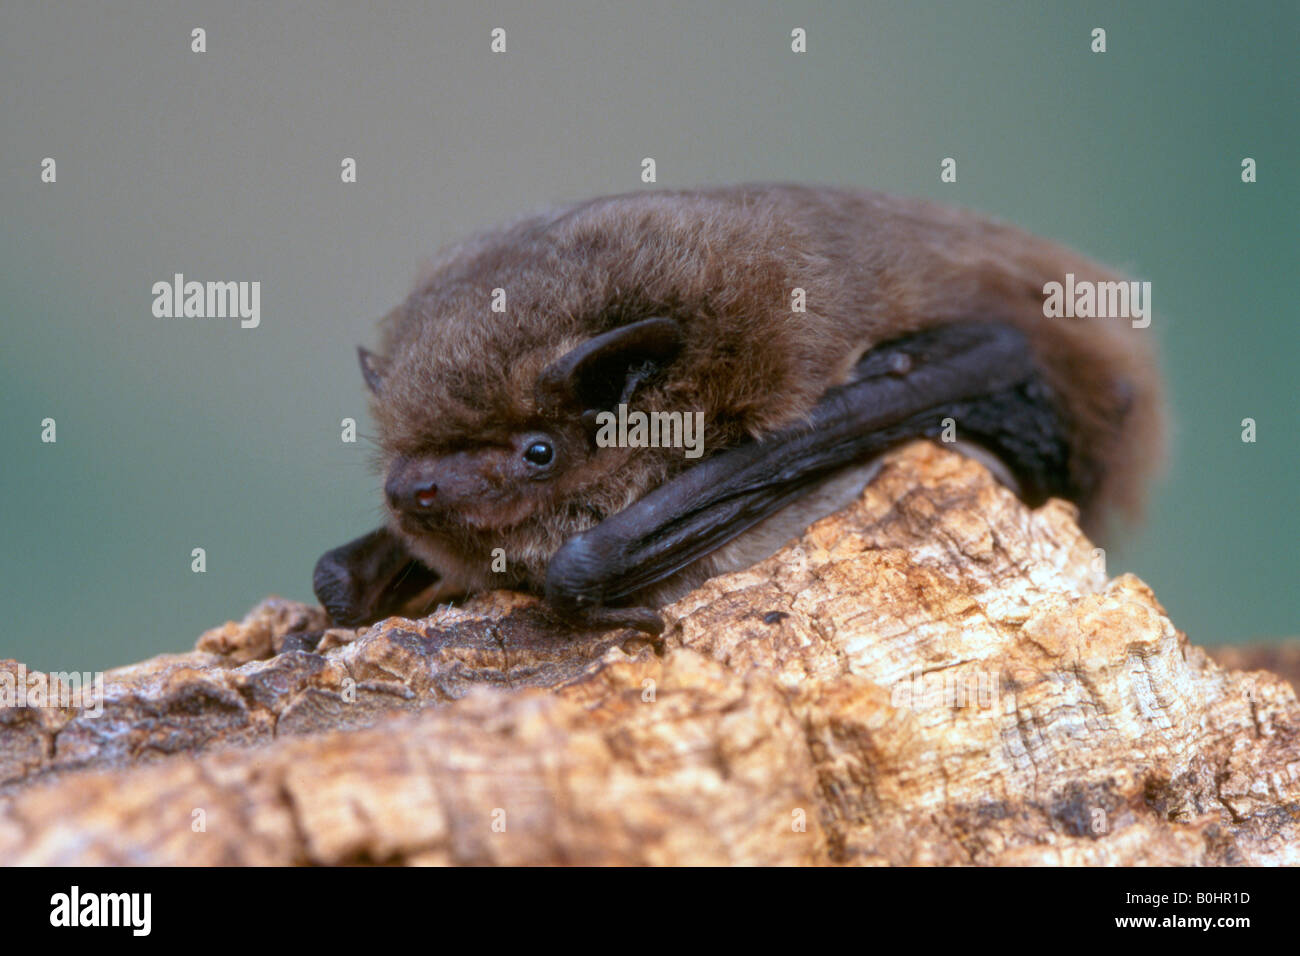 Bat Pipistrelle común (Pipistrellus pipistrellus) aferrada a un trozo de madera, de Schwaz, Tirol, Austria, Europa Foto de stock